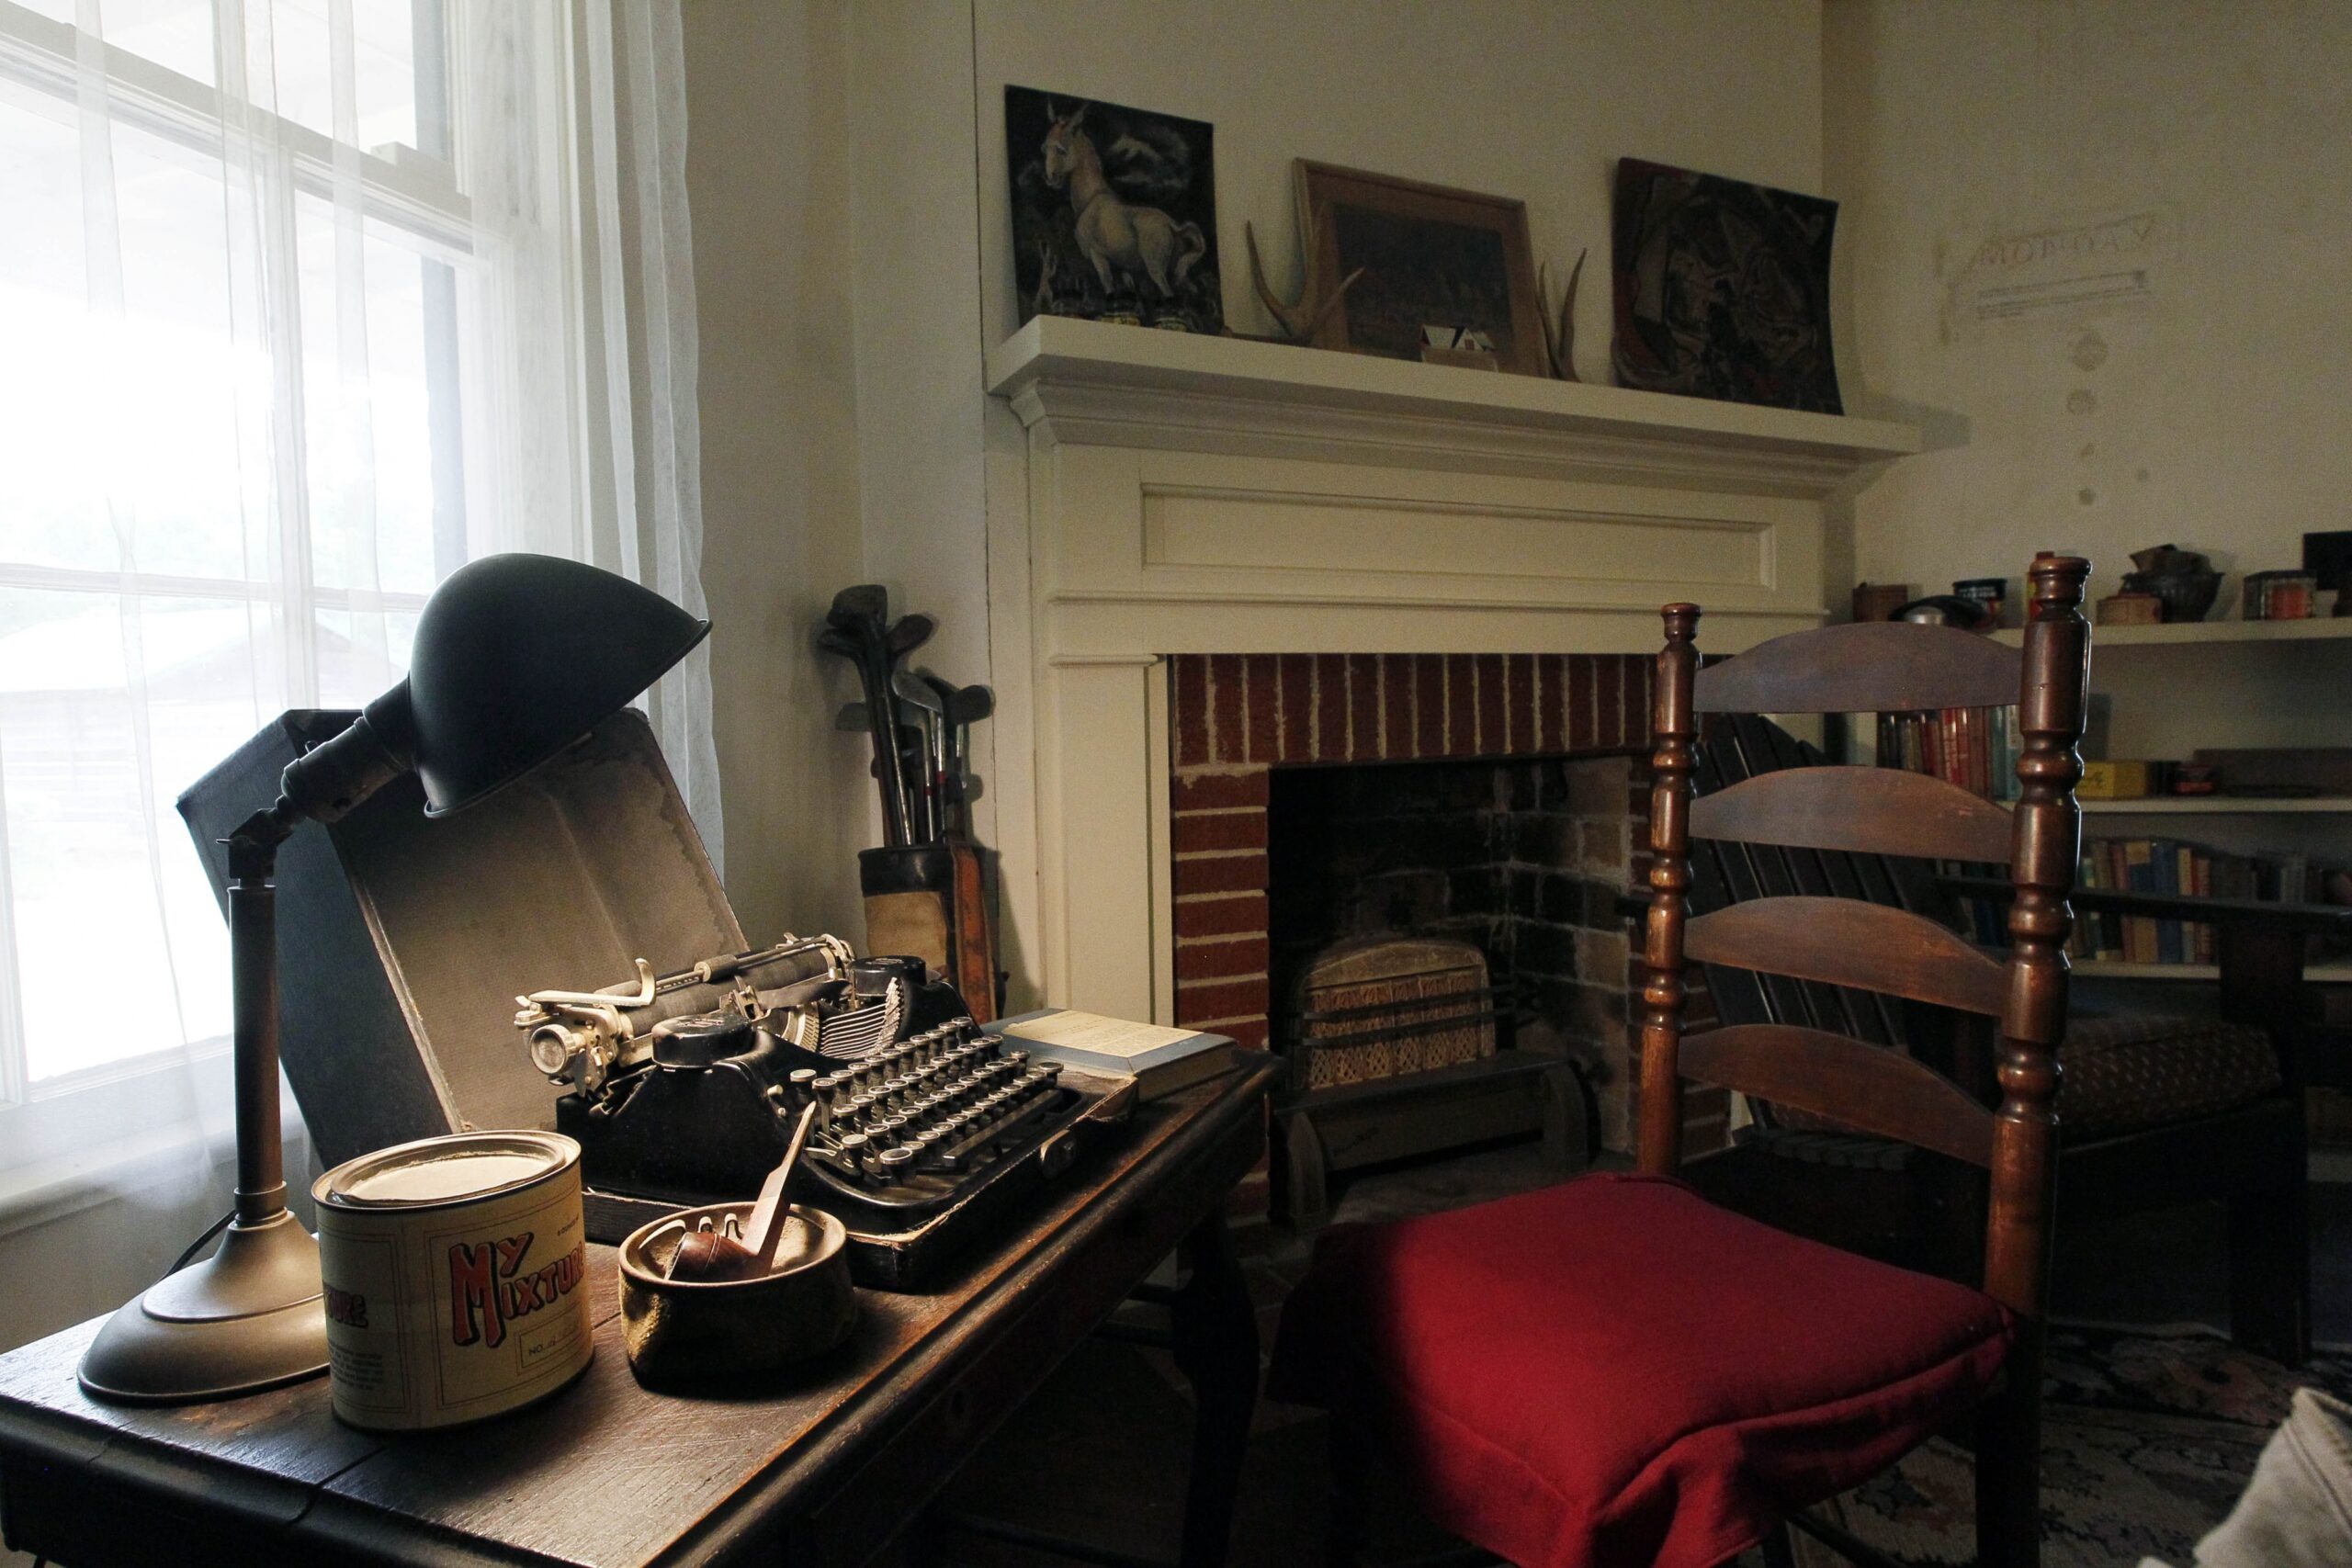 William Faulkner's typewriter on his writing desk